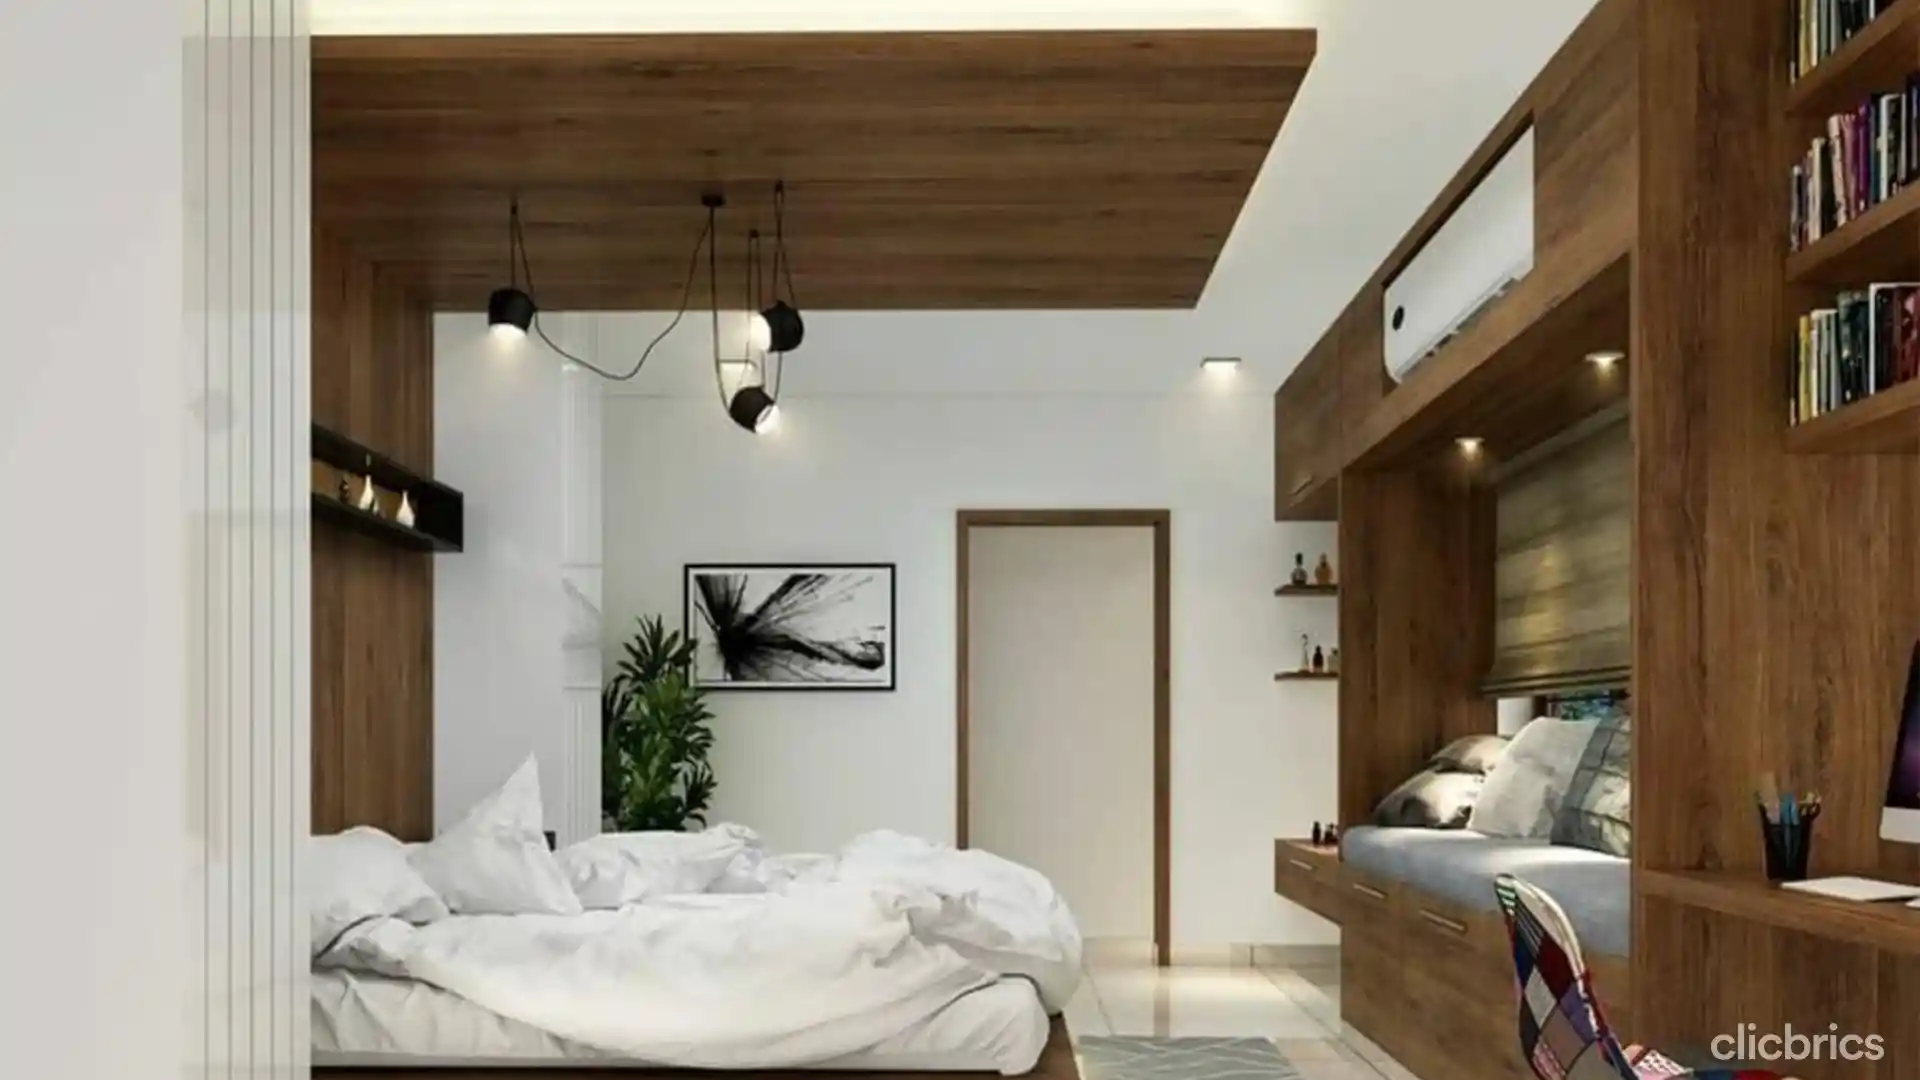 15 Bedroom Ceiling Design Ideas